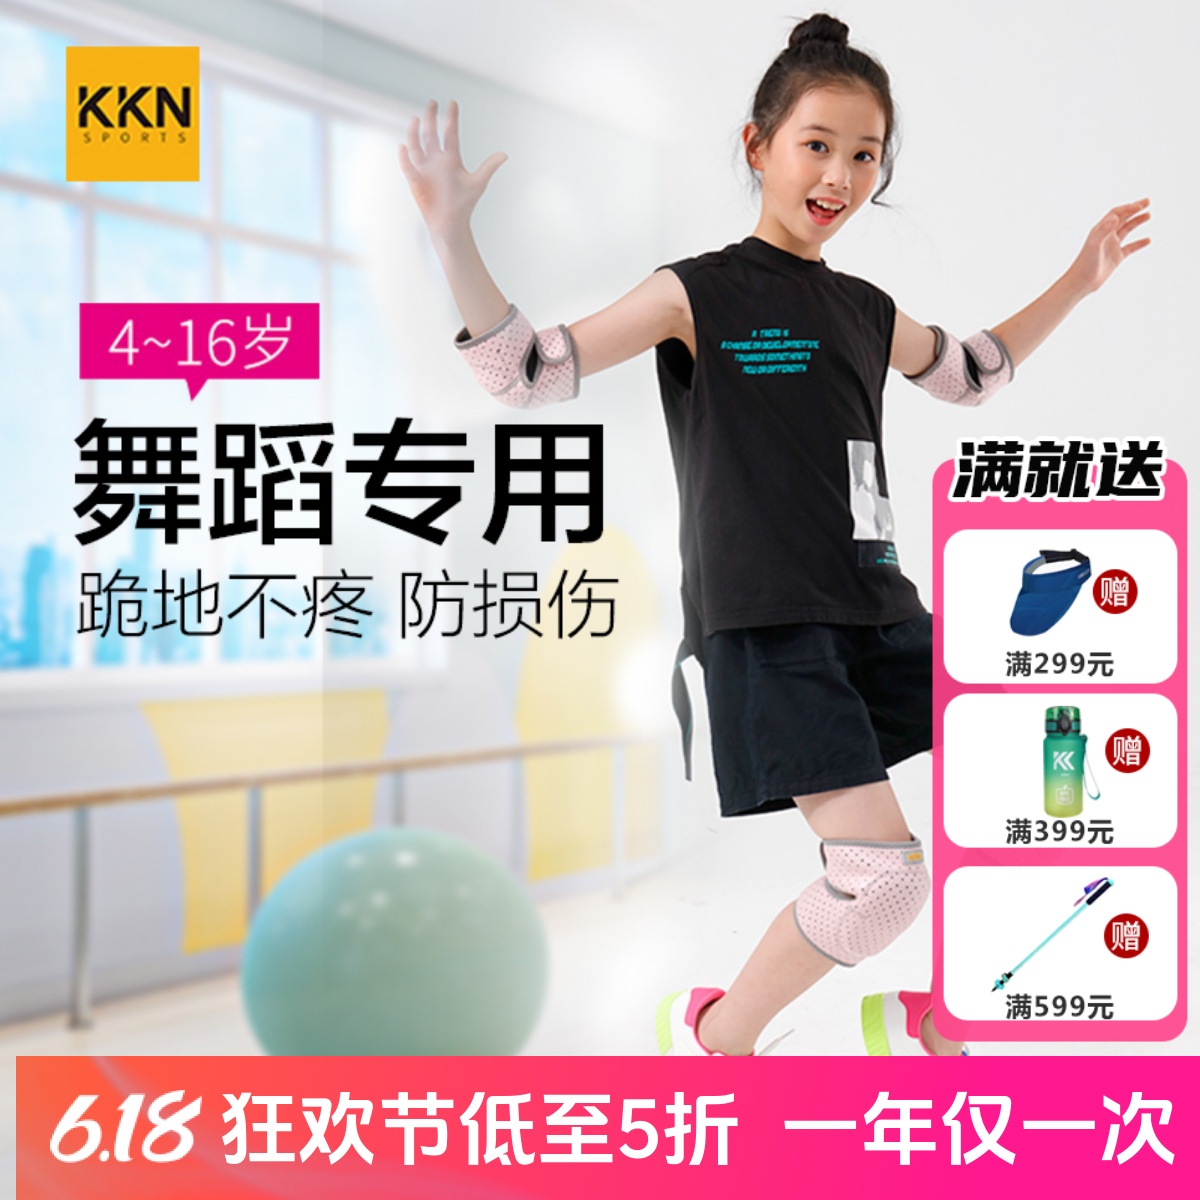 KKN儿童舞蹈护膝护肘护具运动加厚垫片关节防撞舞蹈芭蕾瑜伽轮滑